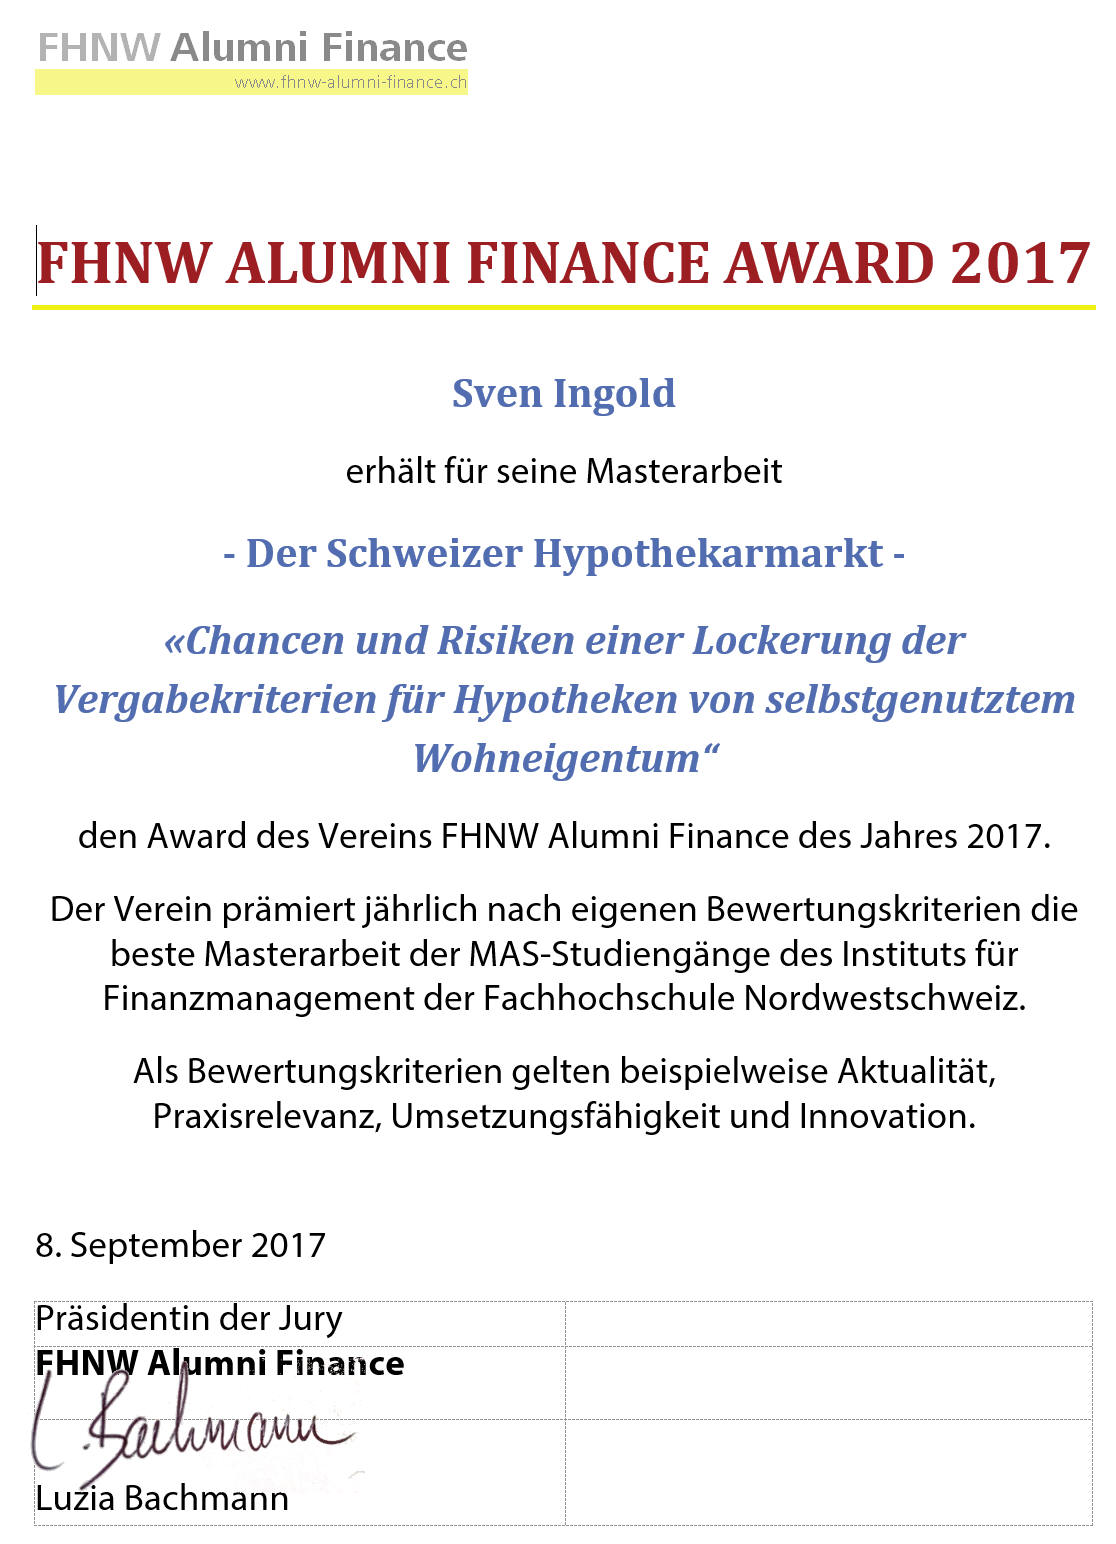 FHNW Alumni Award 2017